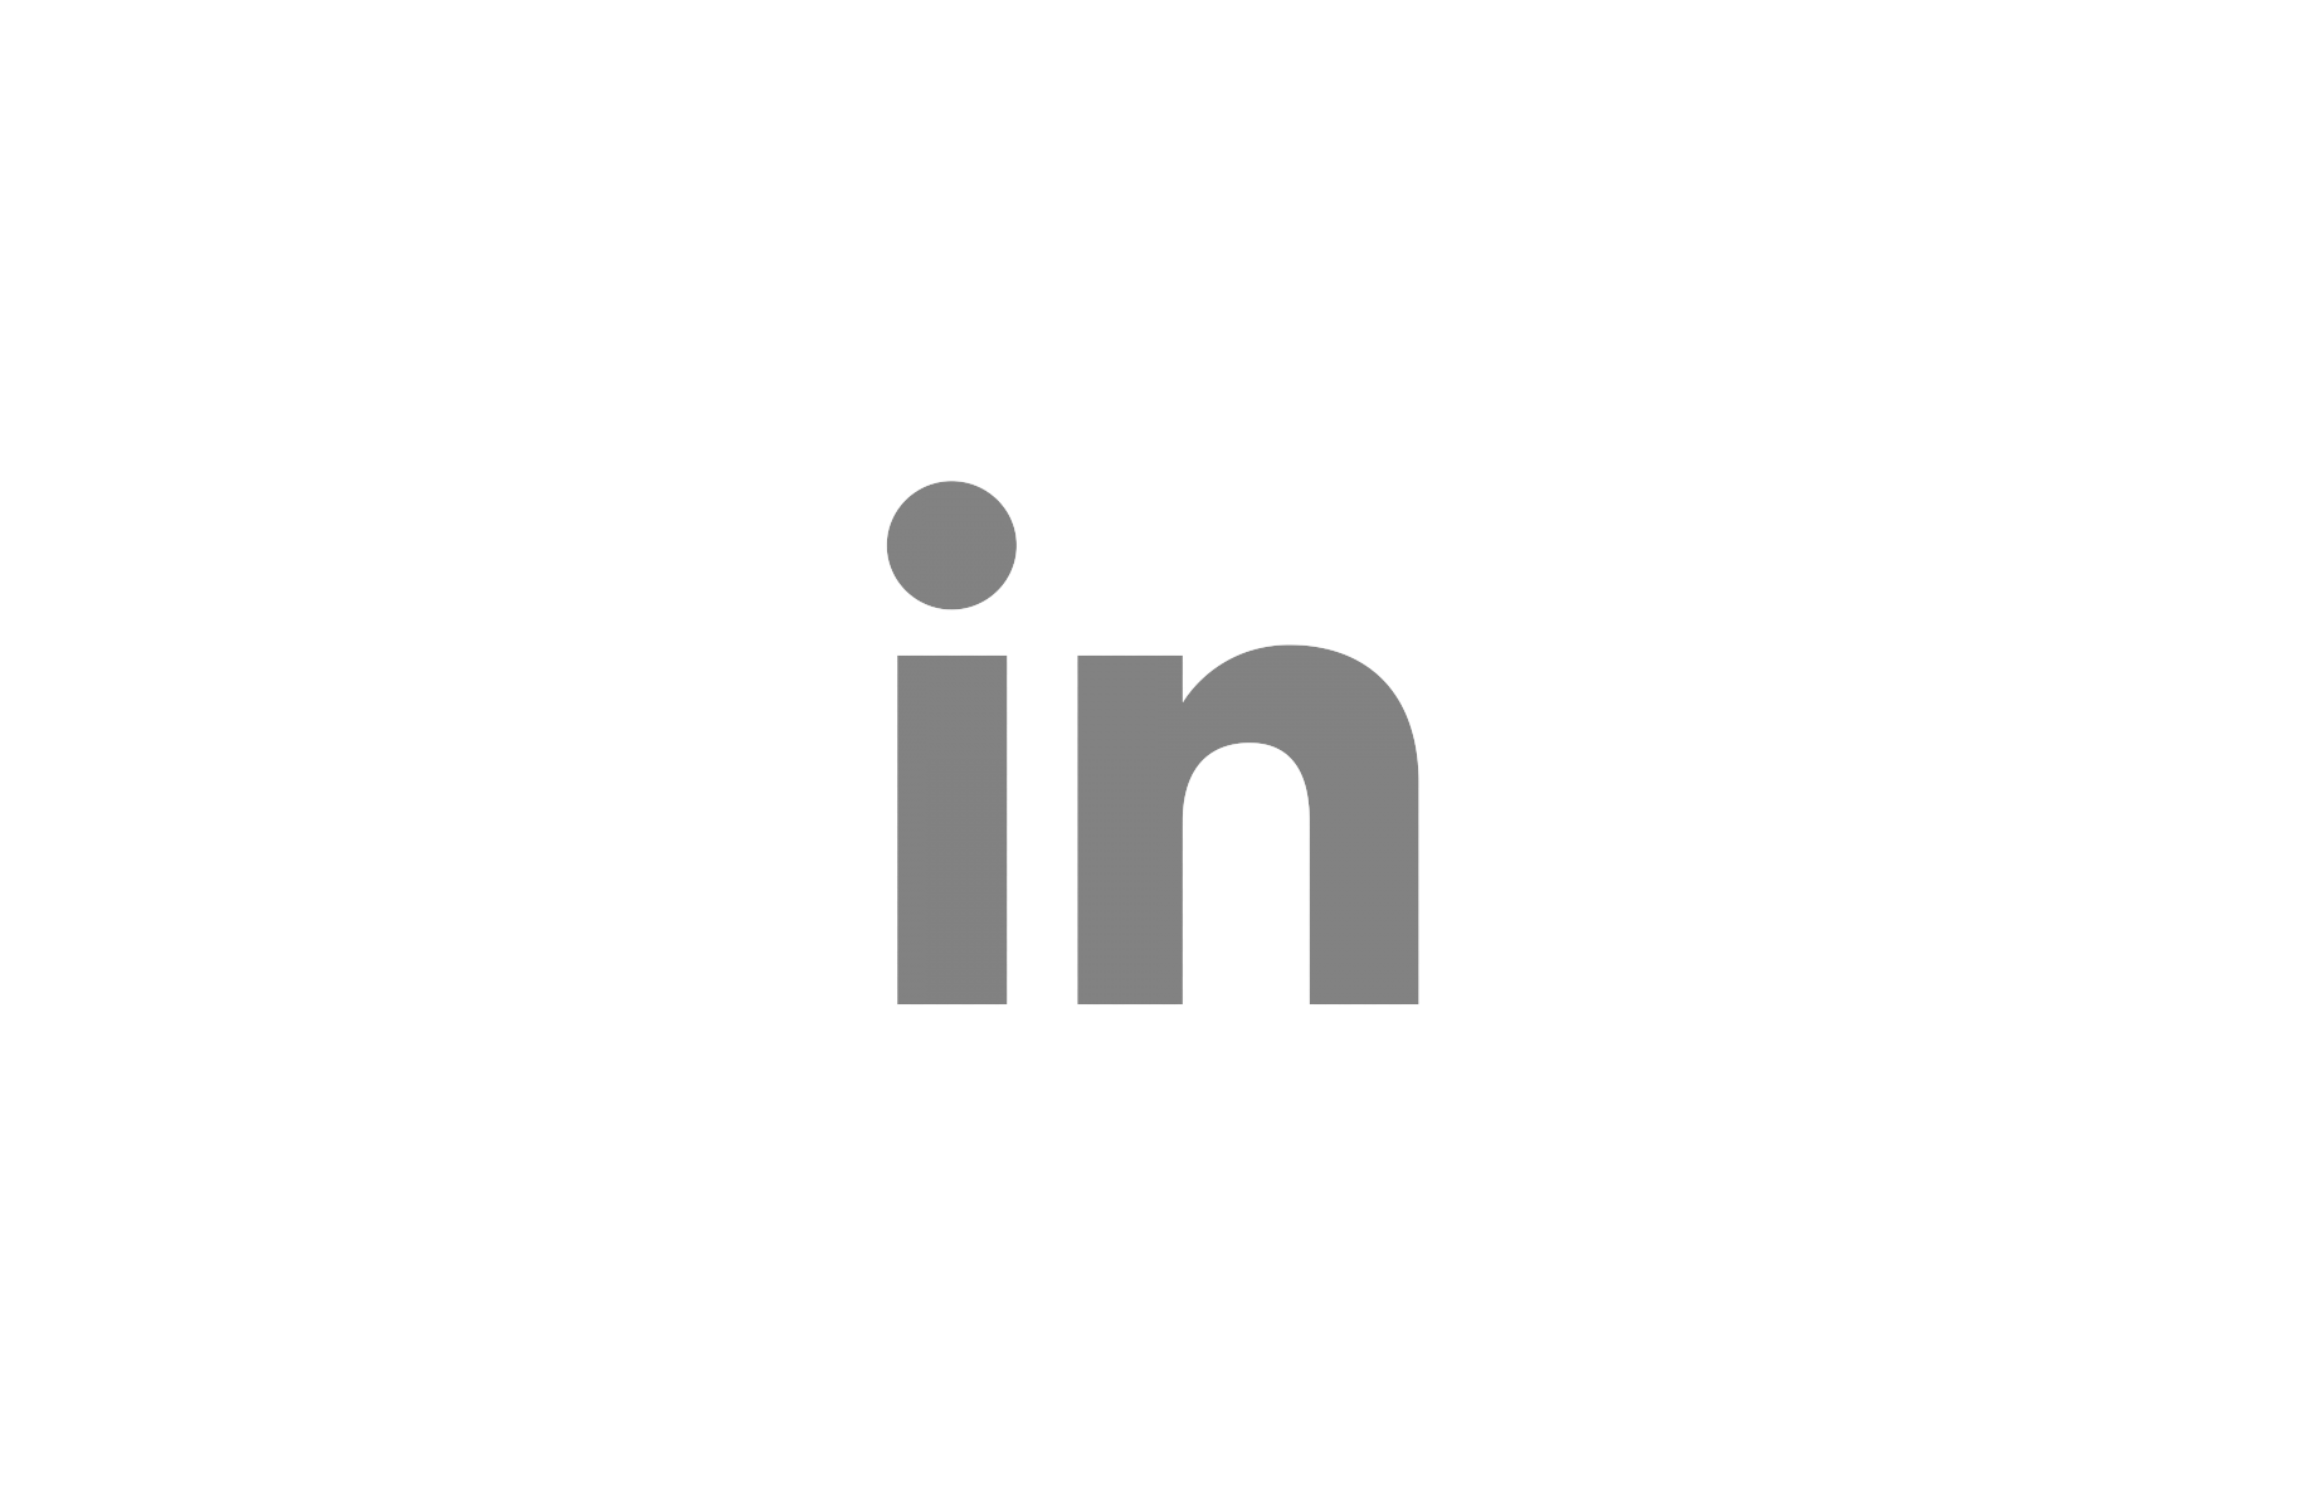 Follow Sycor.Rental on LinkedIn